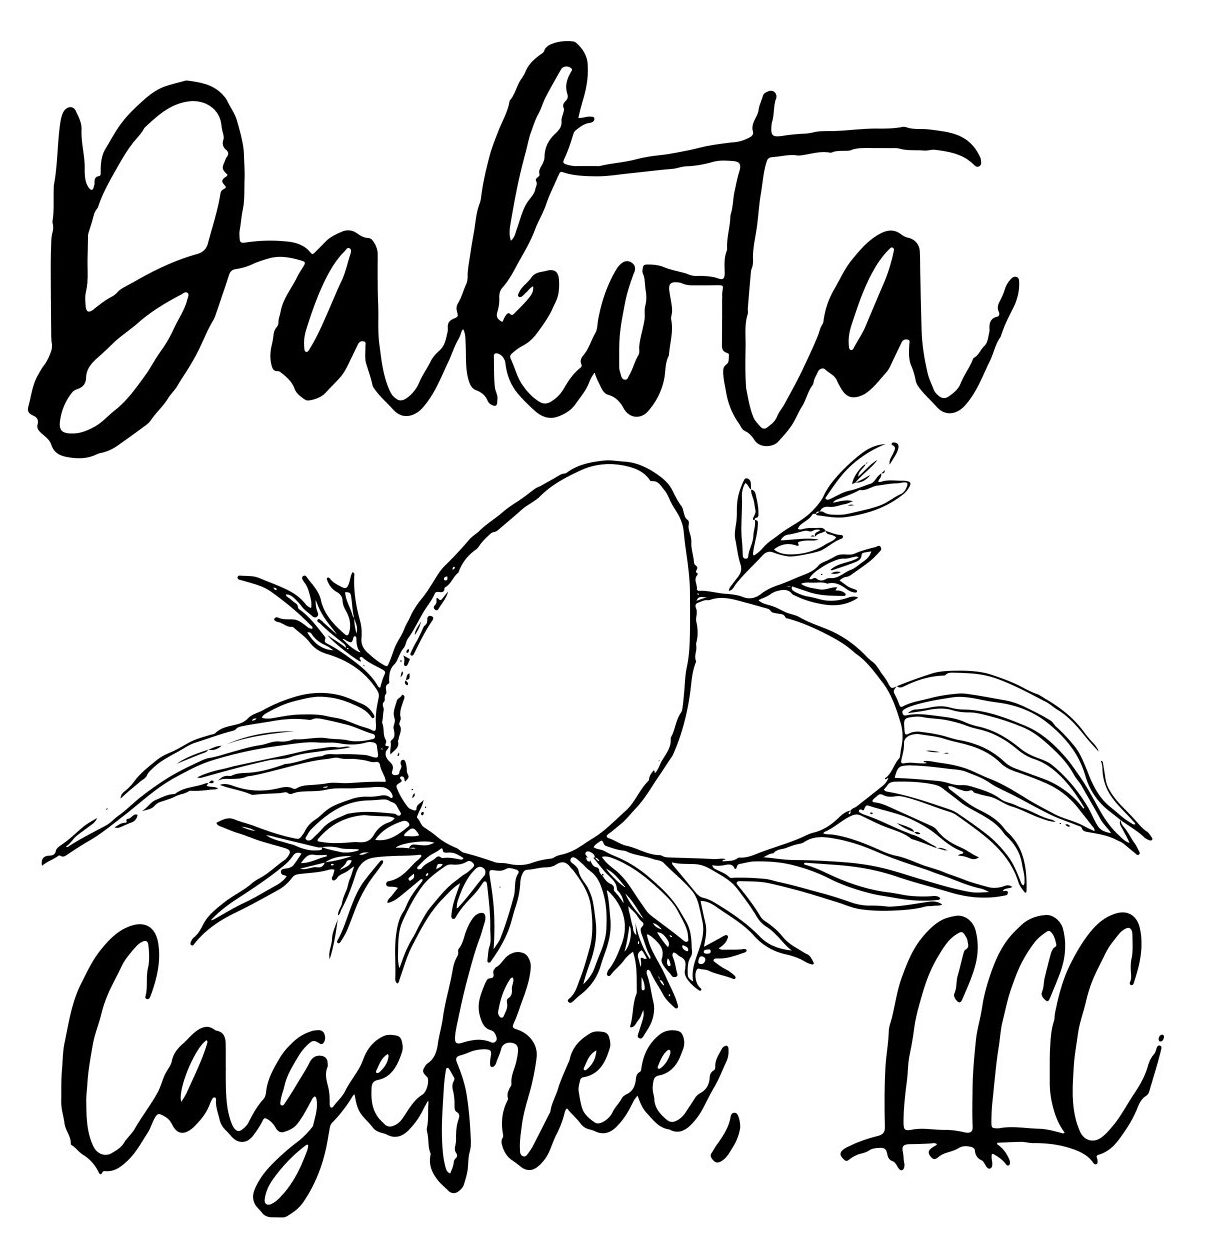 Dakota Cage Free